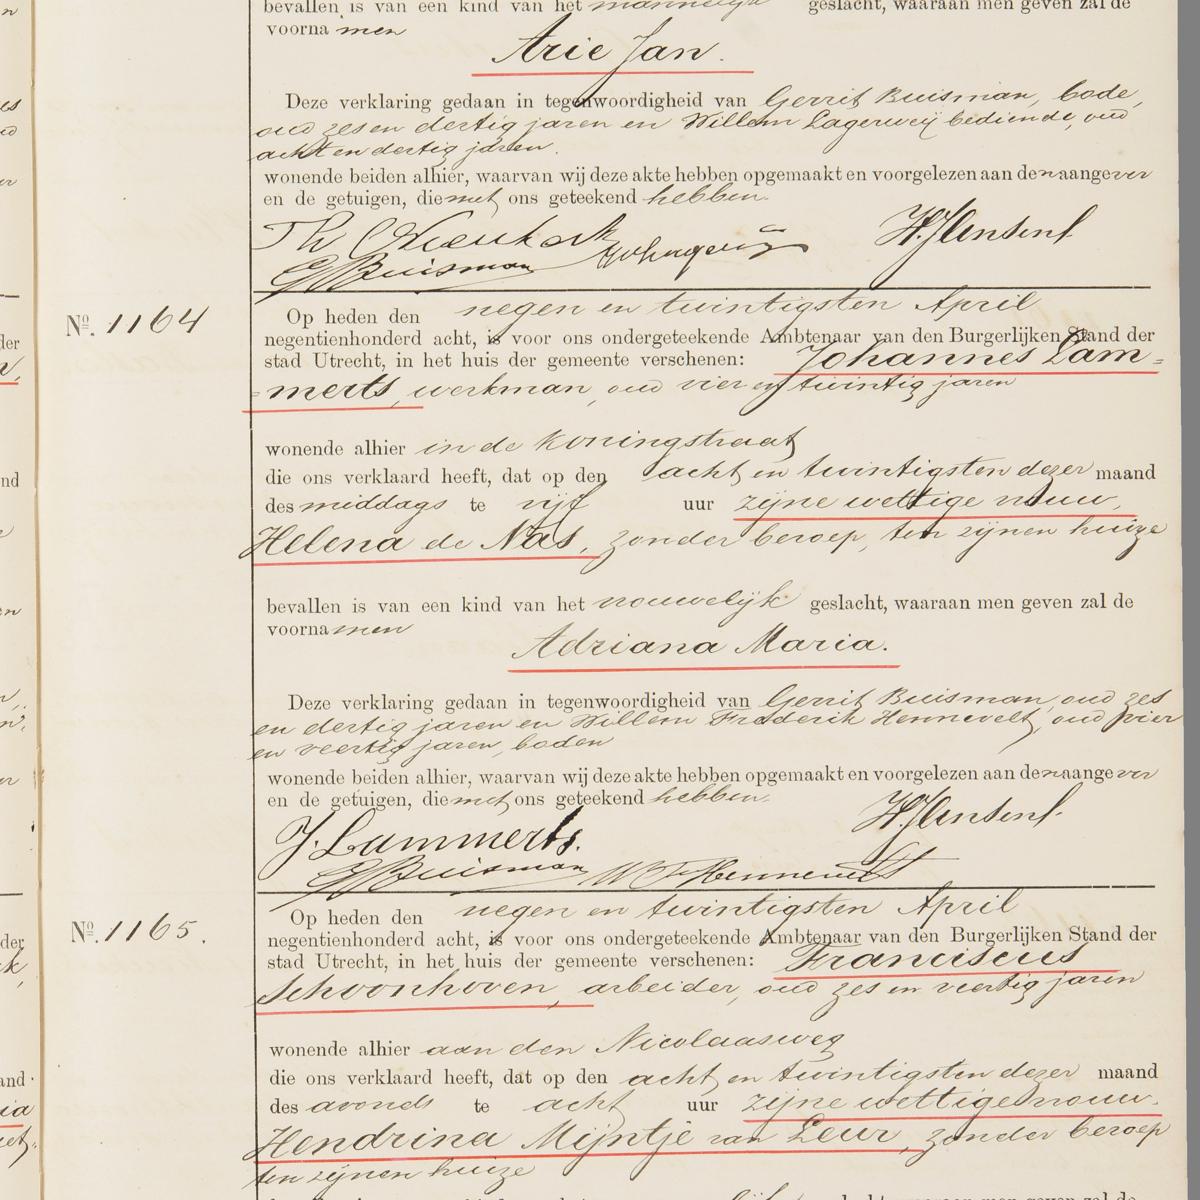 Civil registry of marriages, Utrecht, 1908, records 1163-1165